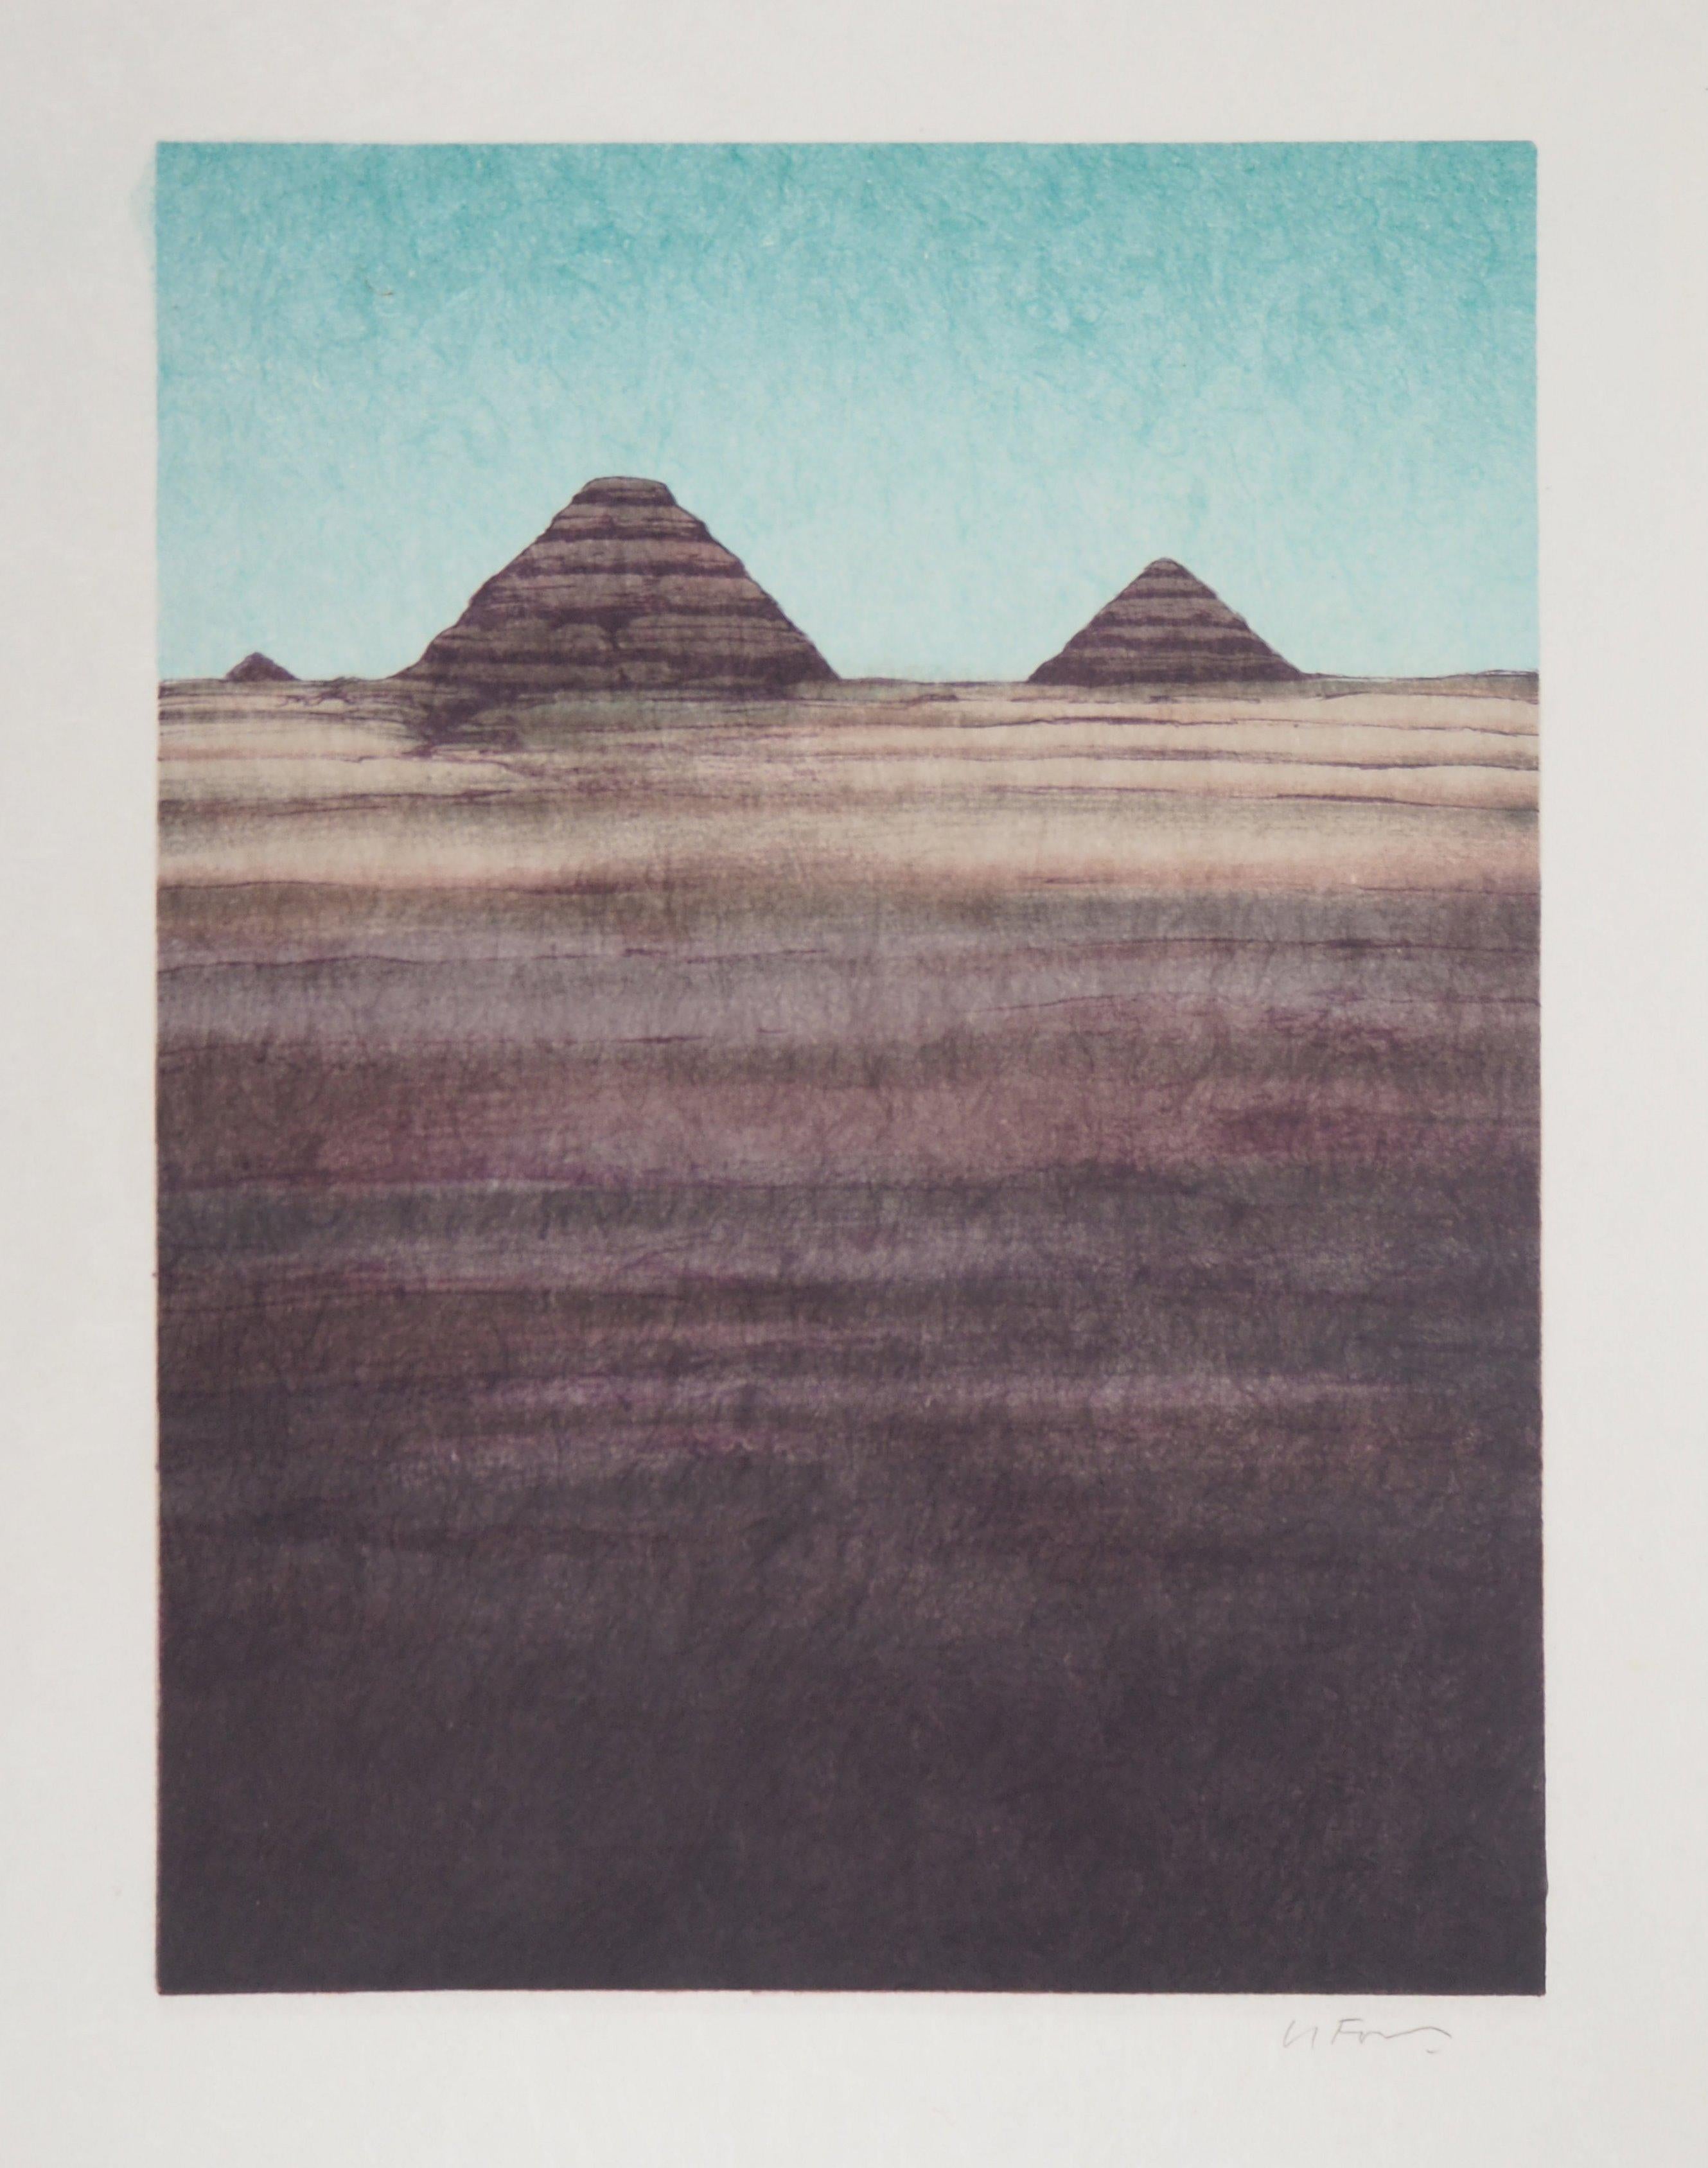 Egypt : The Pyramid of Giza - Handsigned Original Lithograph